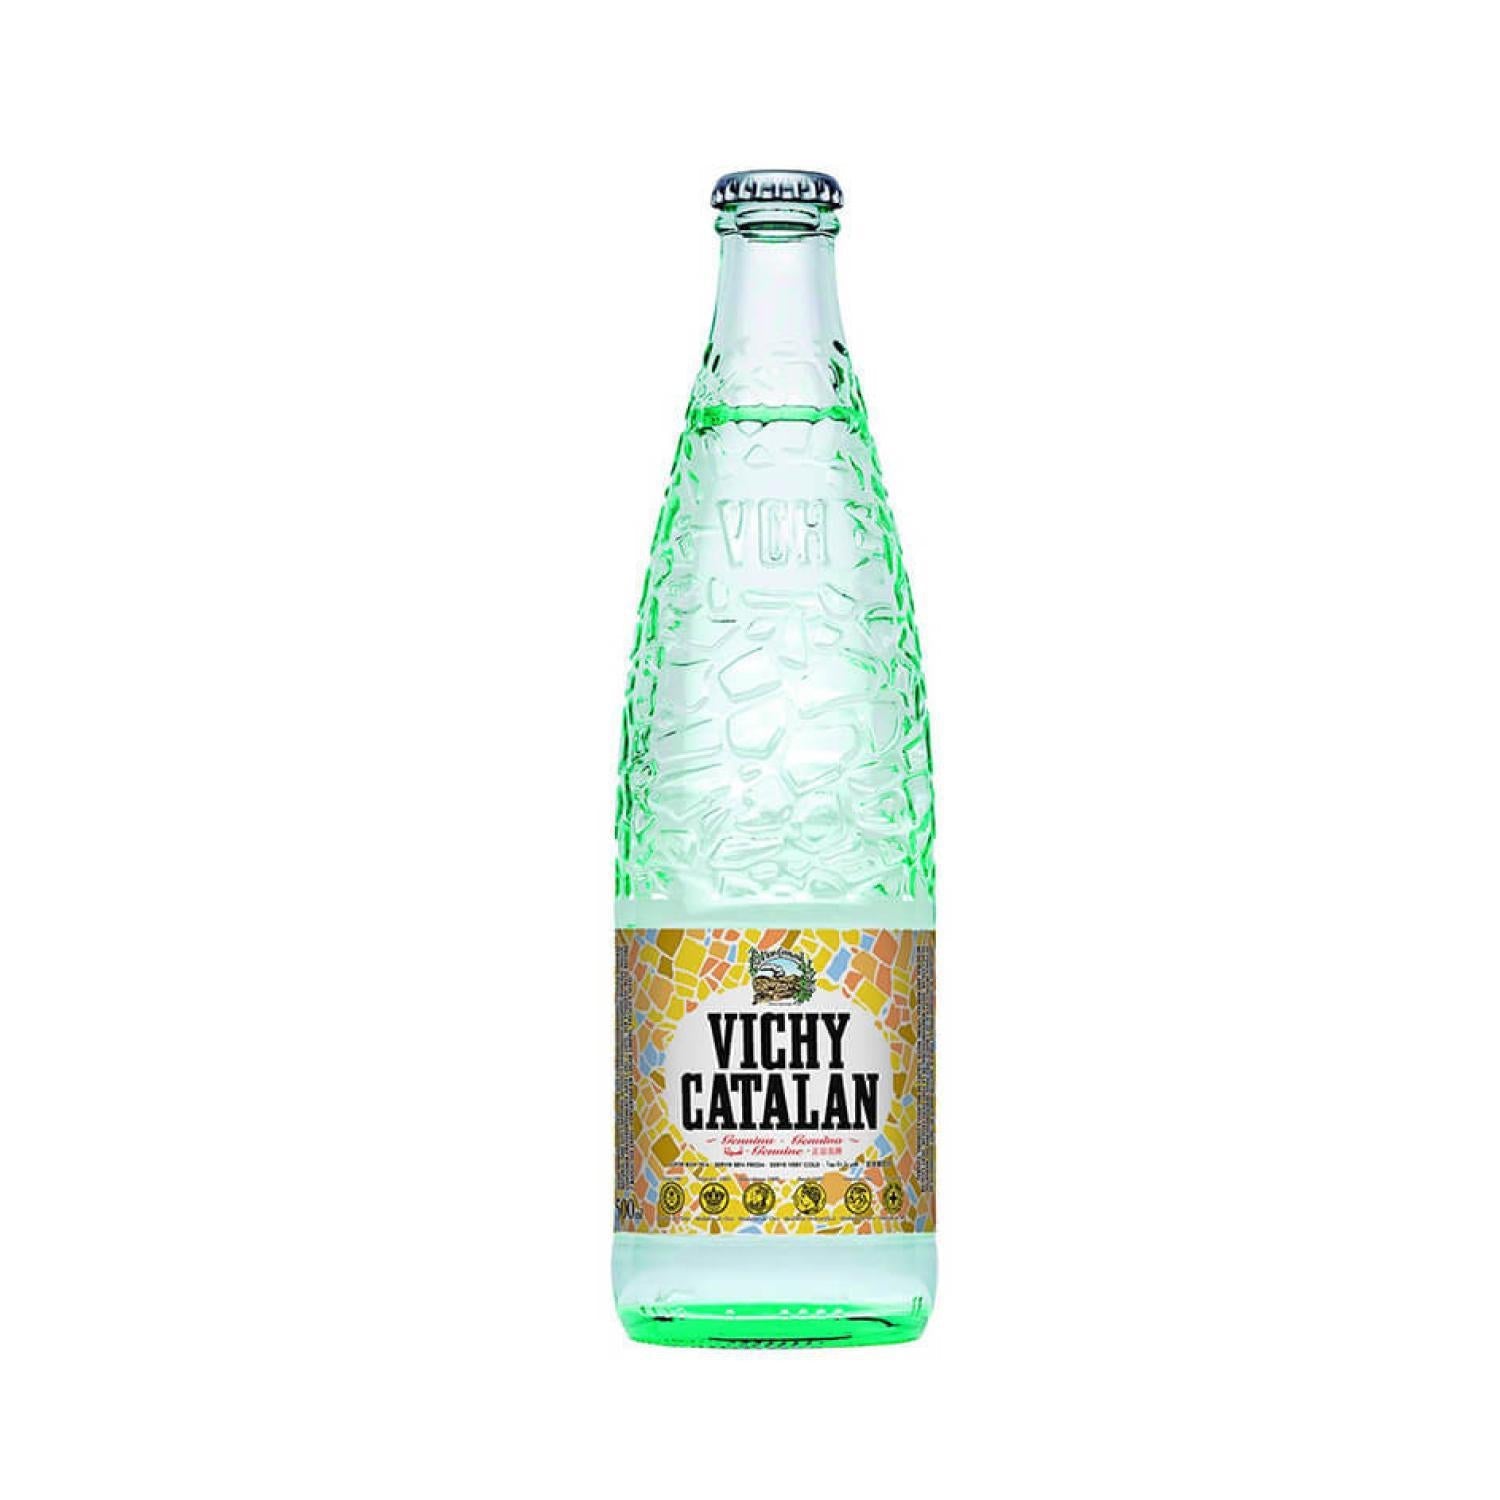 Vichy Catalan - Sparkling Water